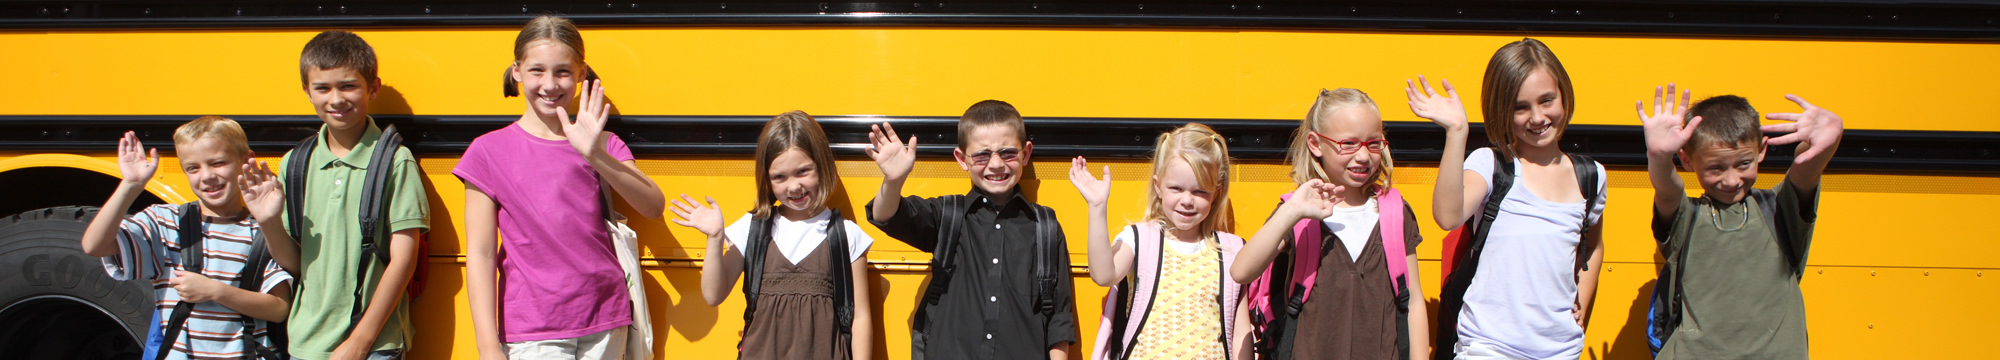 students standing in front of school bus